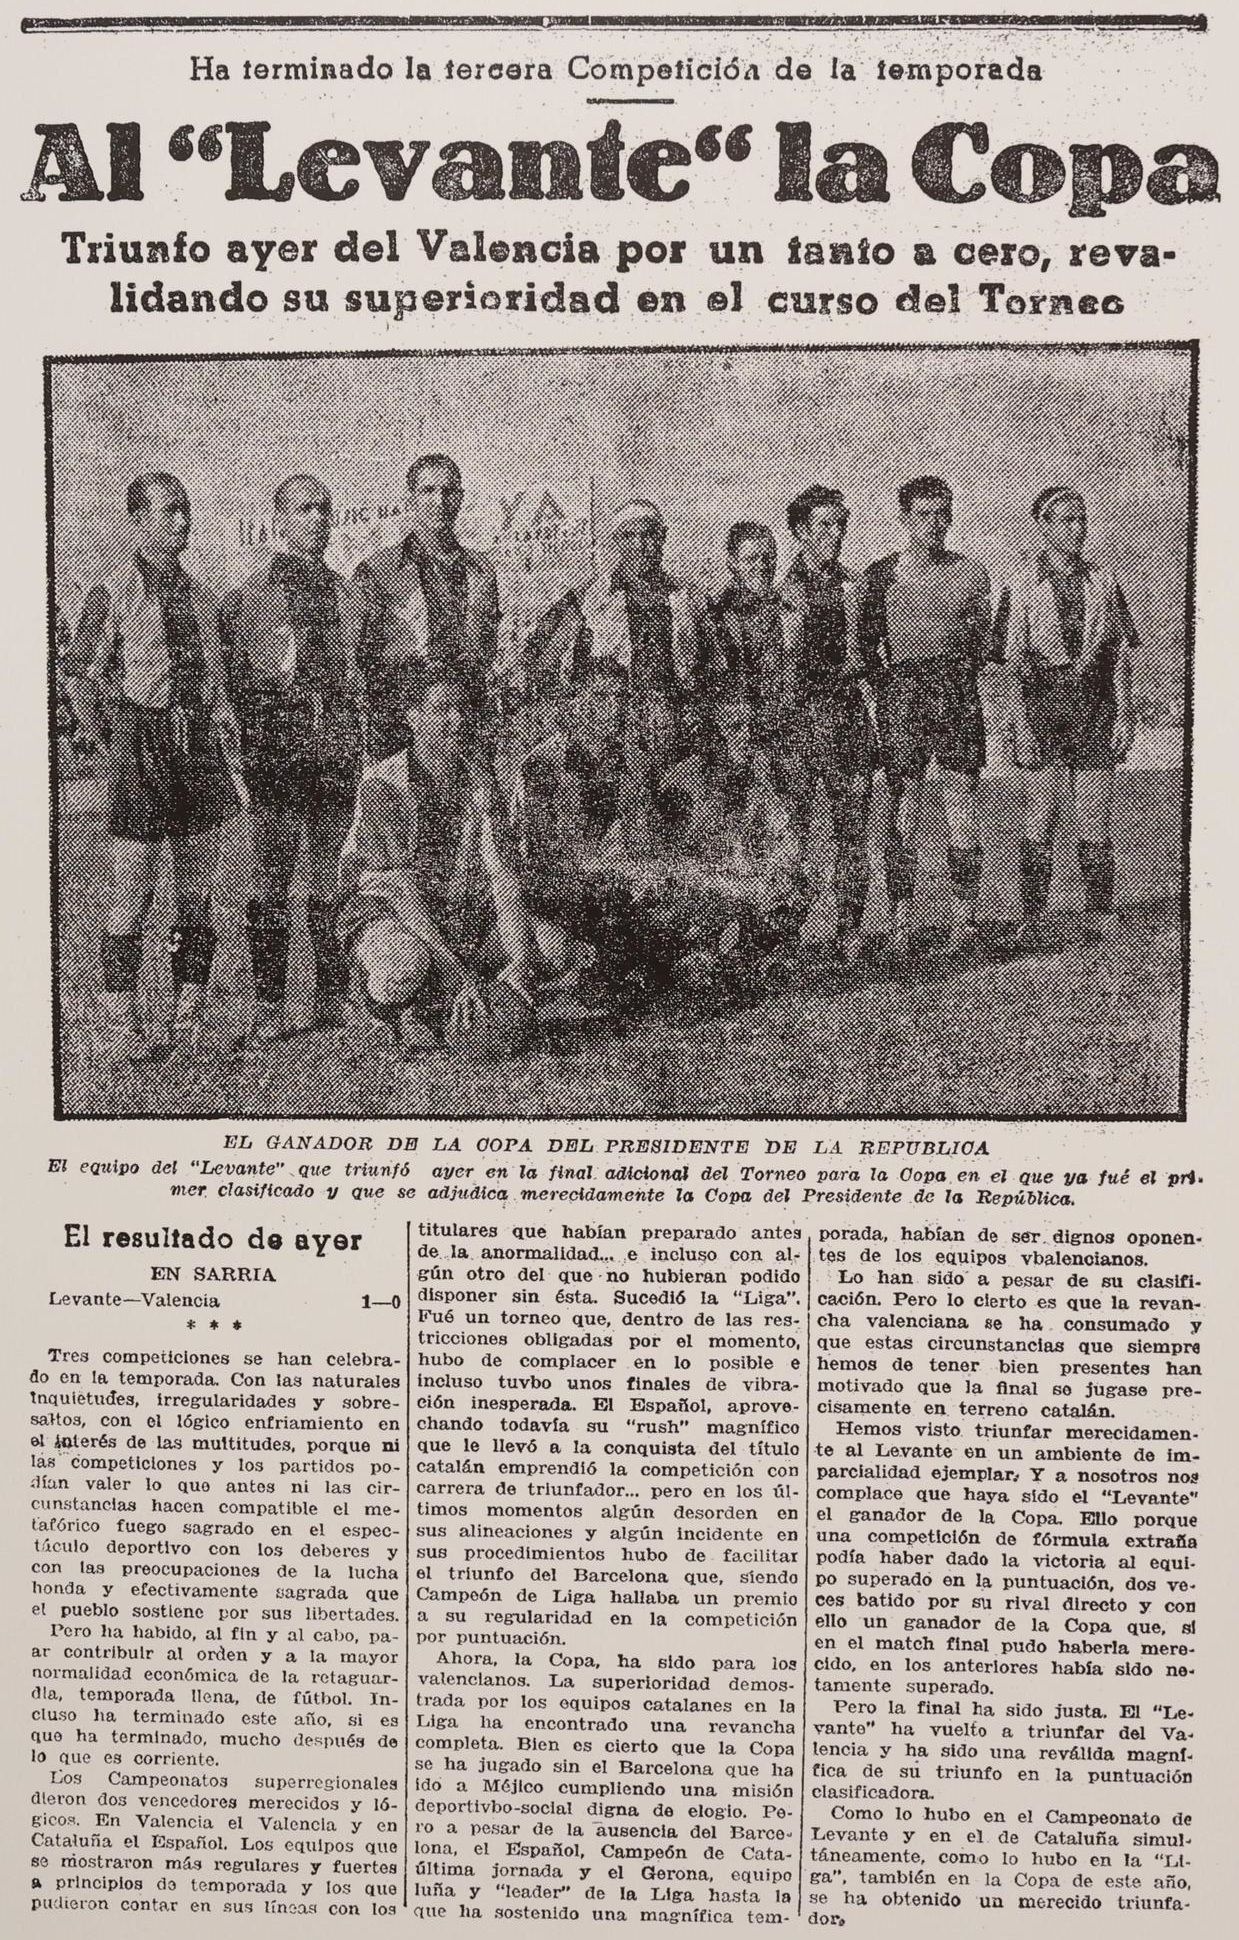 1937.07.18 (18 июля 1937), Леванте - Валенсия, 1-0 (3).jpg